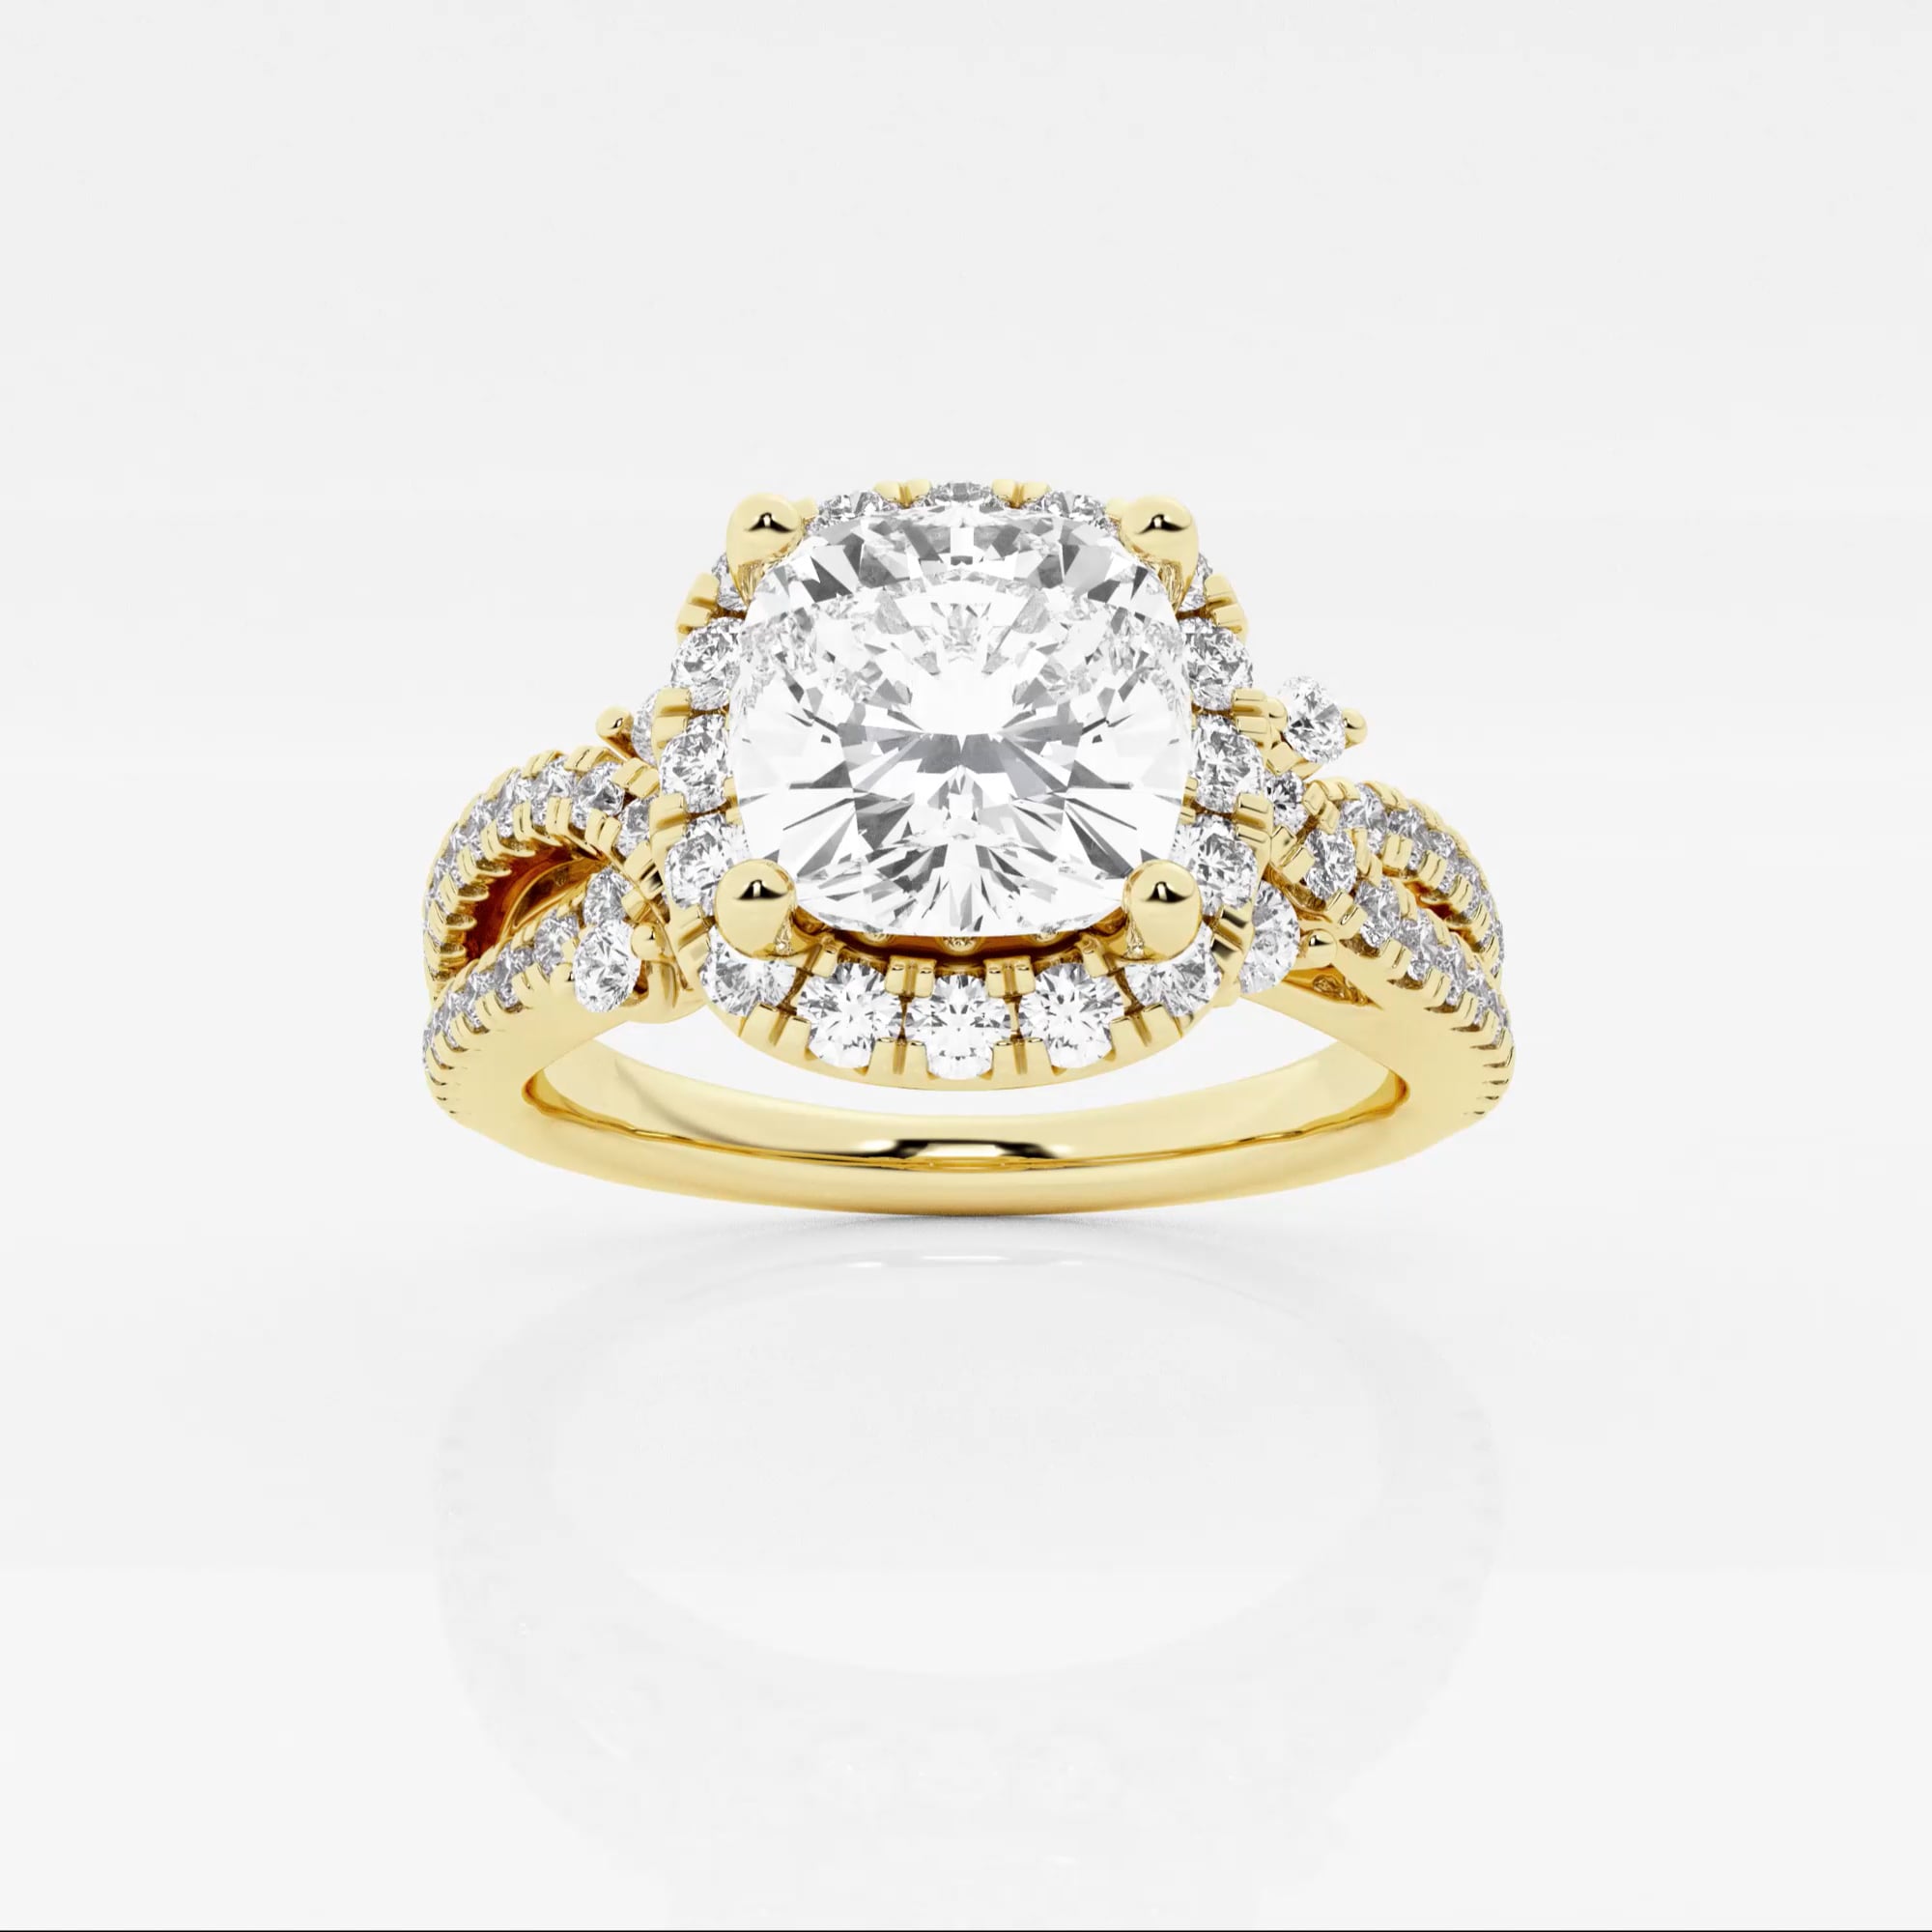 1/4ct tw Diamond Fleur De Lis Wedding Ring Guard in 14K White Gold